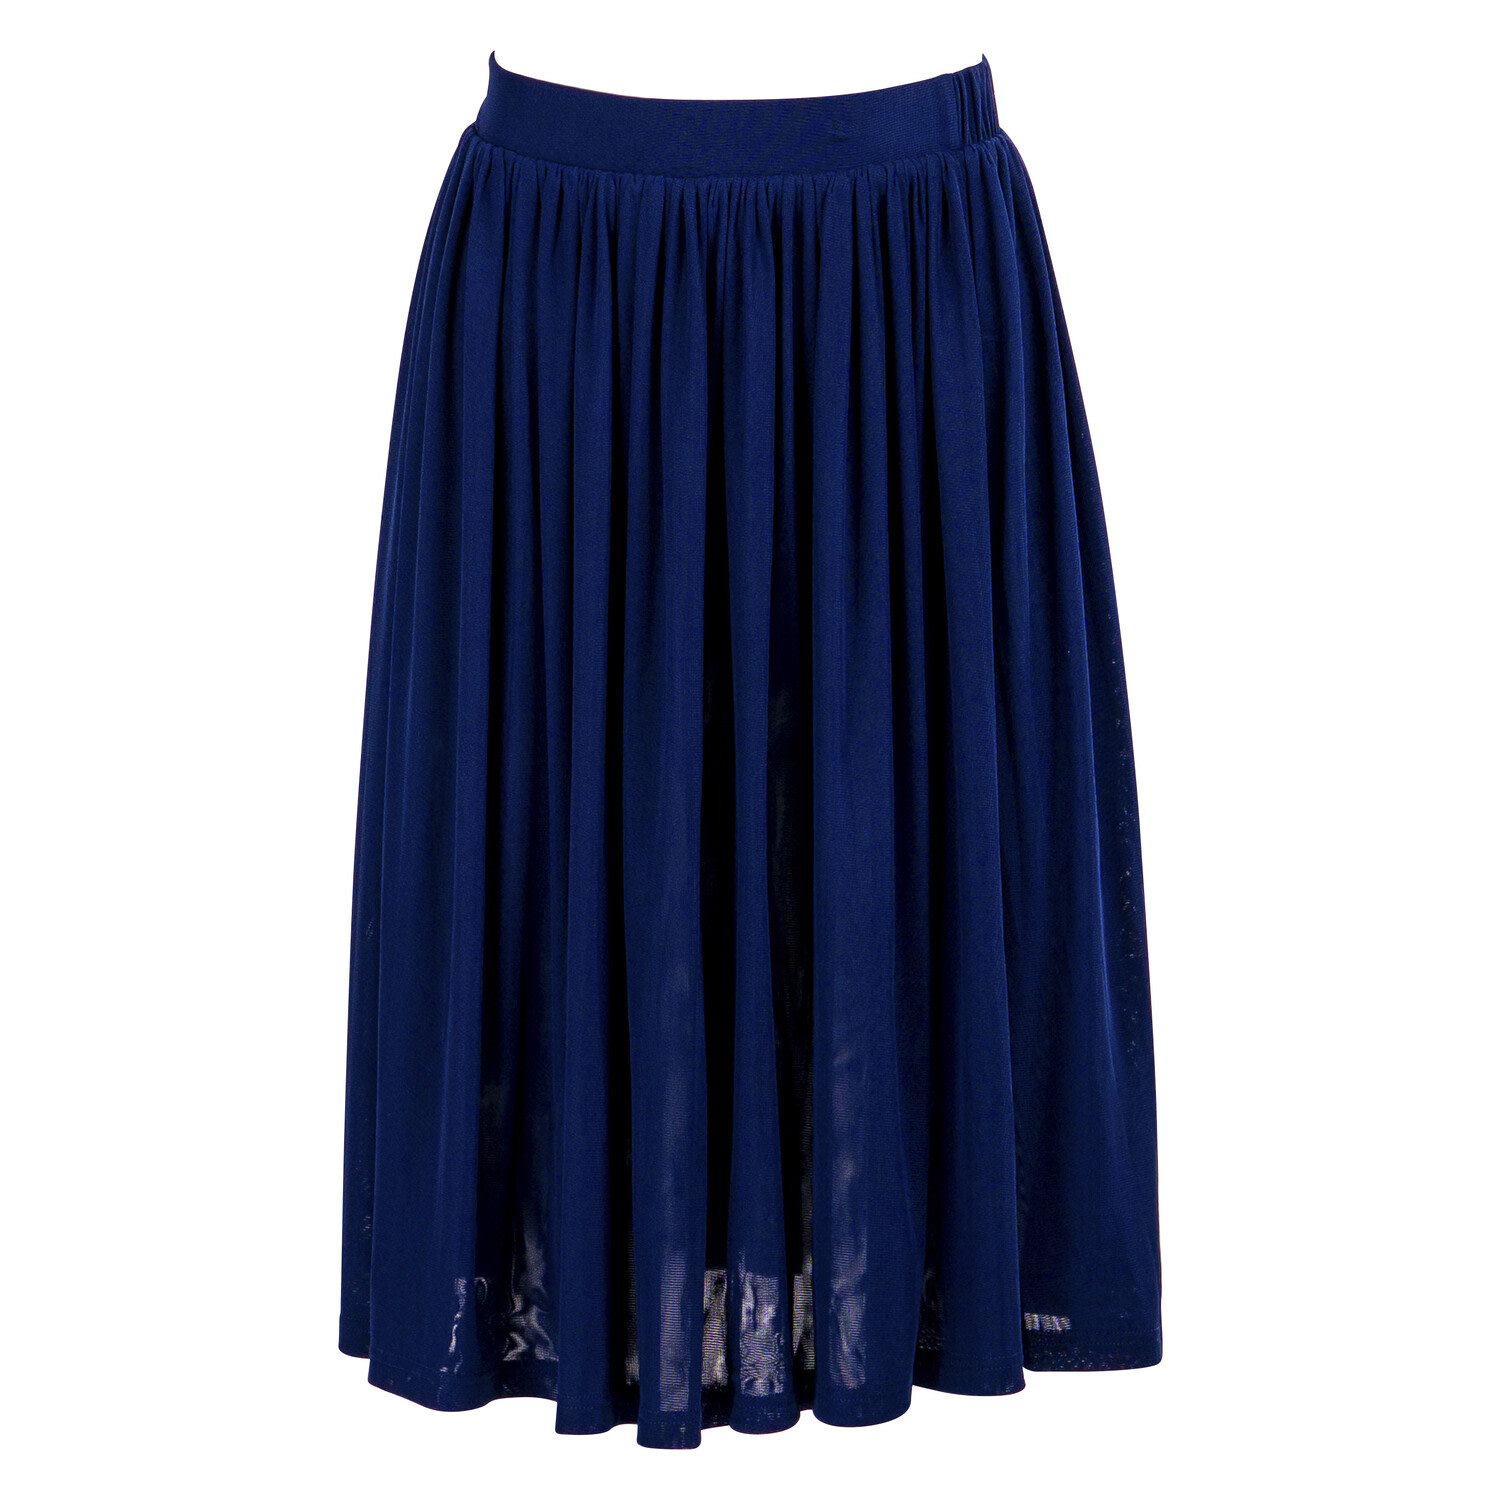 Kristinit Women's Blue Joyful Skirt Navy